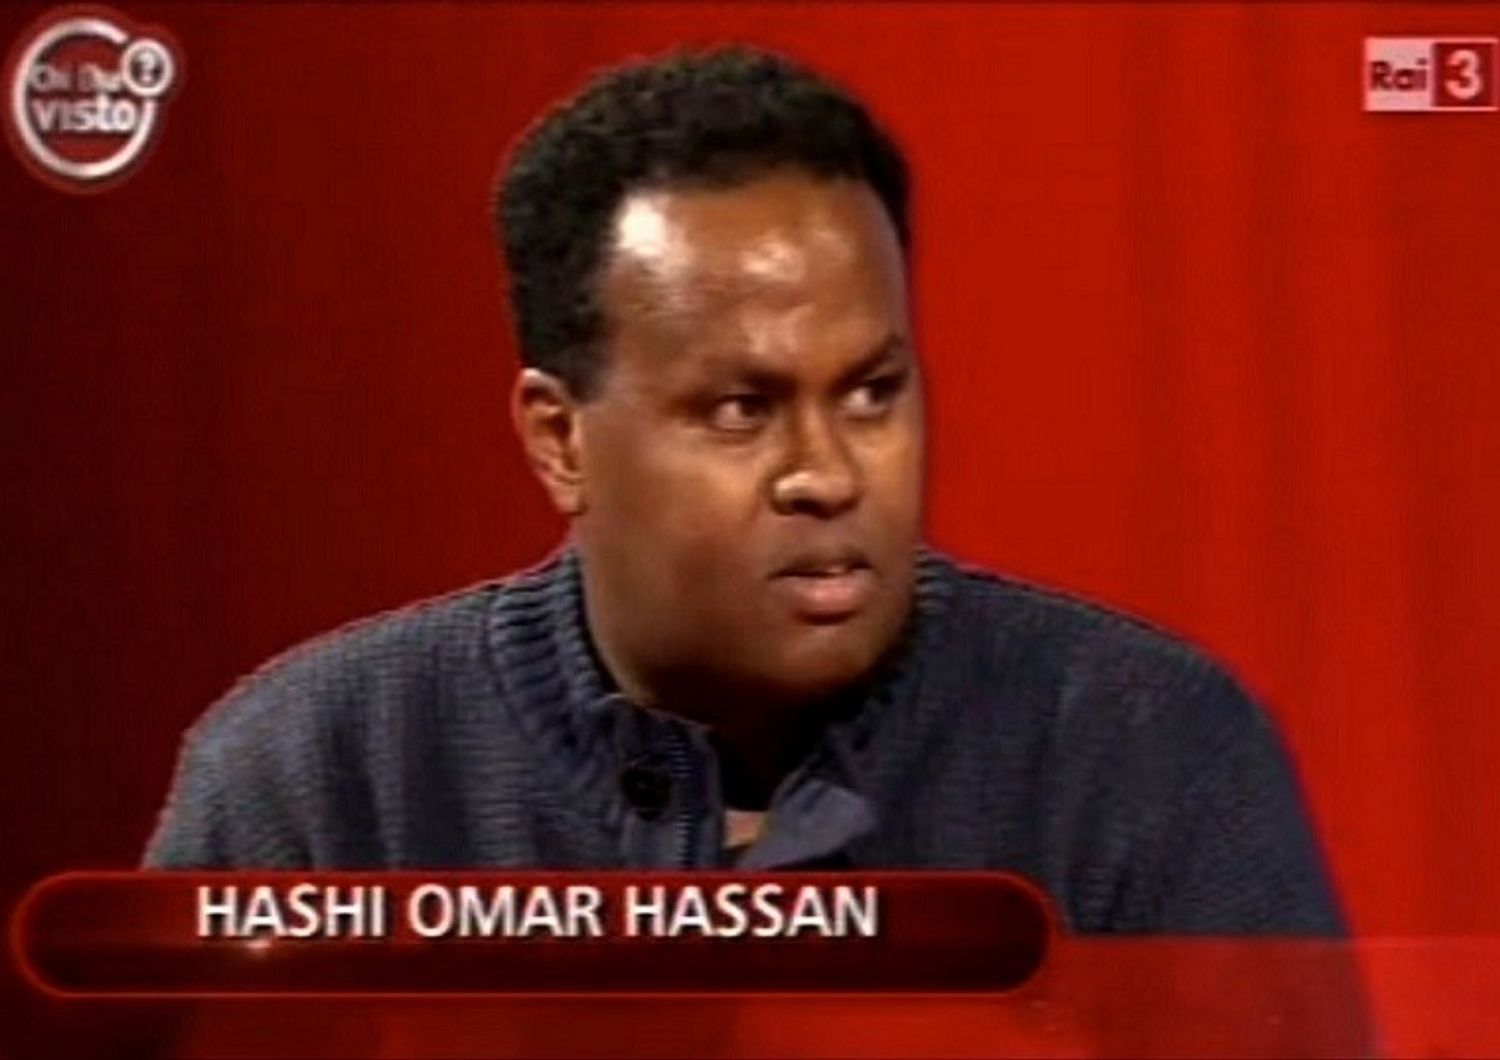 Omar Hashi Hassan